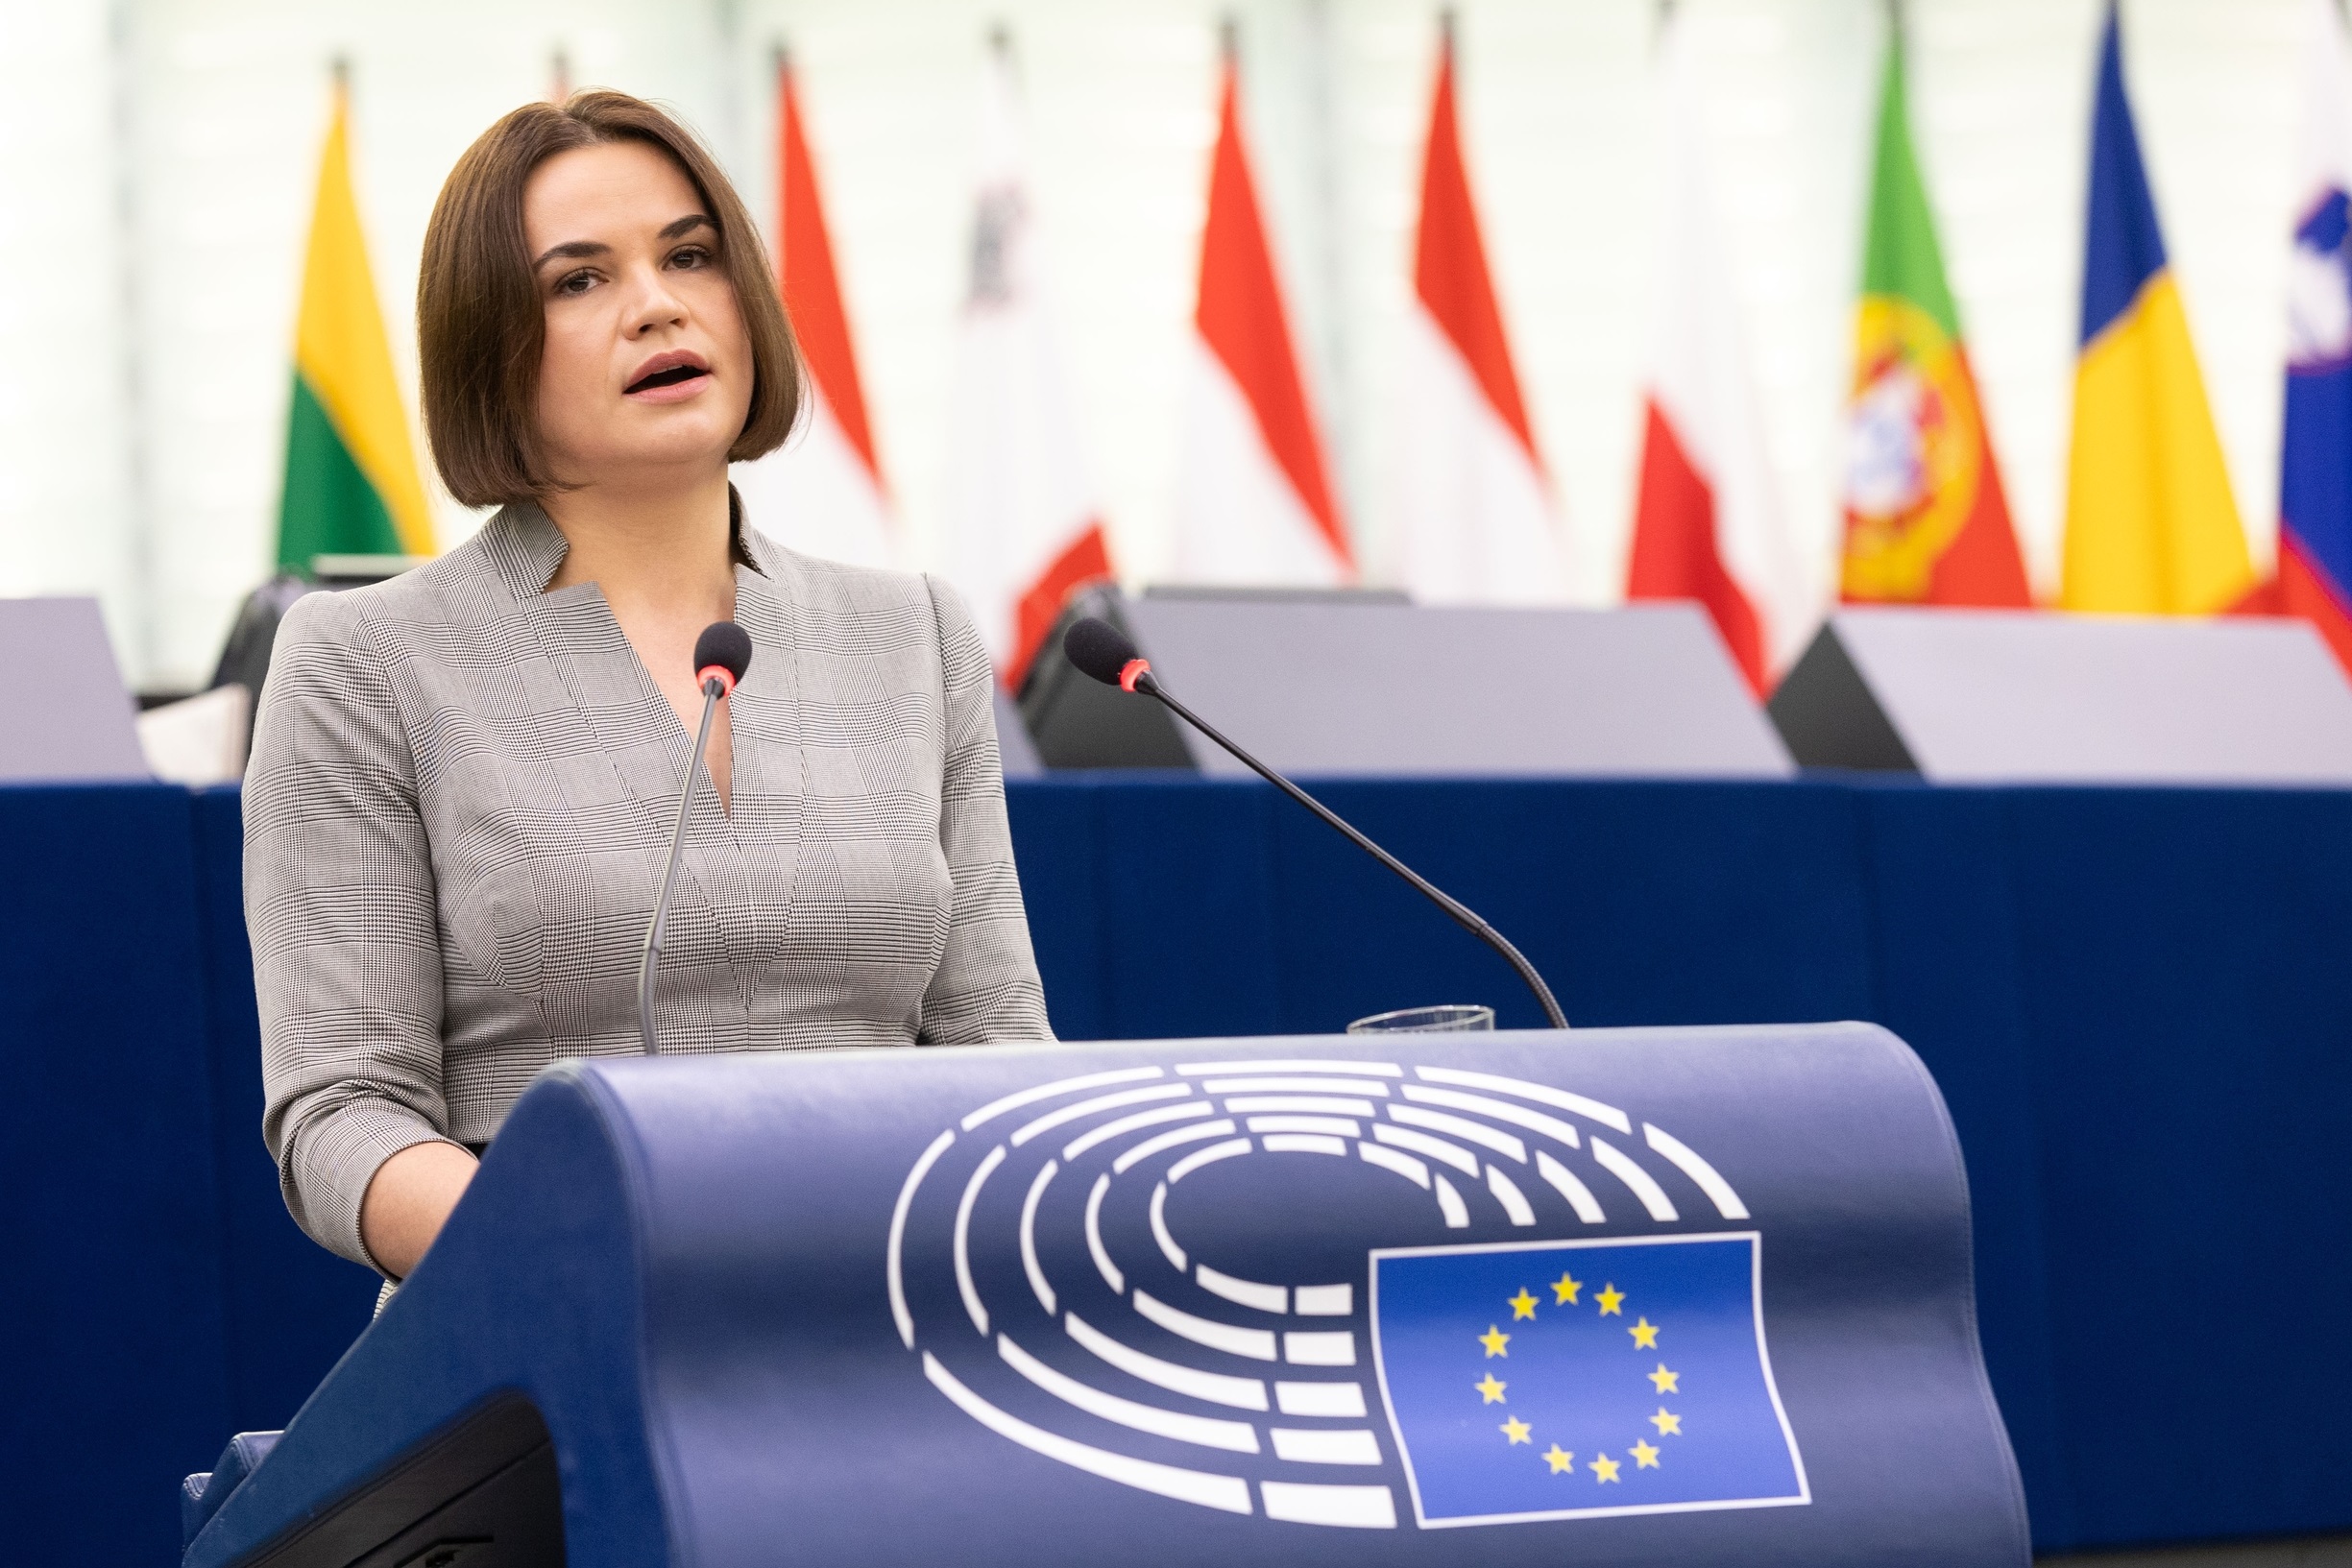 Svetlana Tijanovskaya habla ante el Parlamento Europeo
POLITICA EUROPA INTERNACIONAL BIELORRUSIA
PARLAMENTO EUROPEO/ ALAIN ROLLAND
